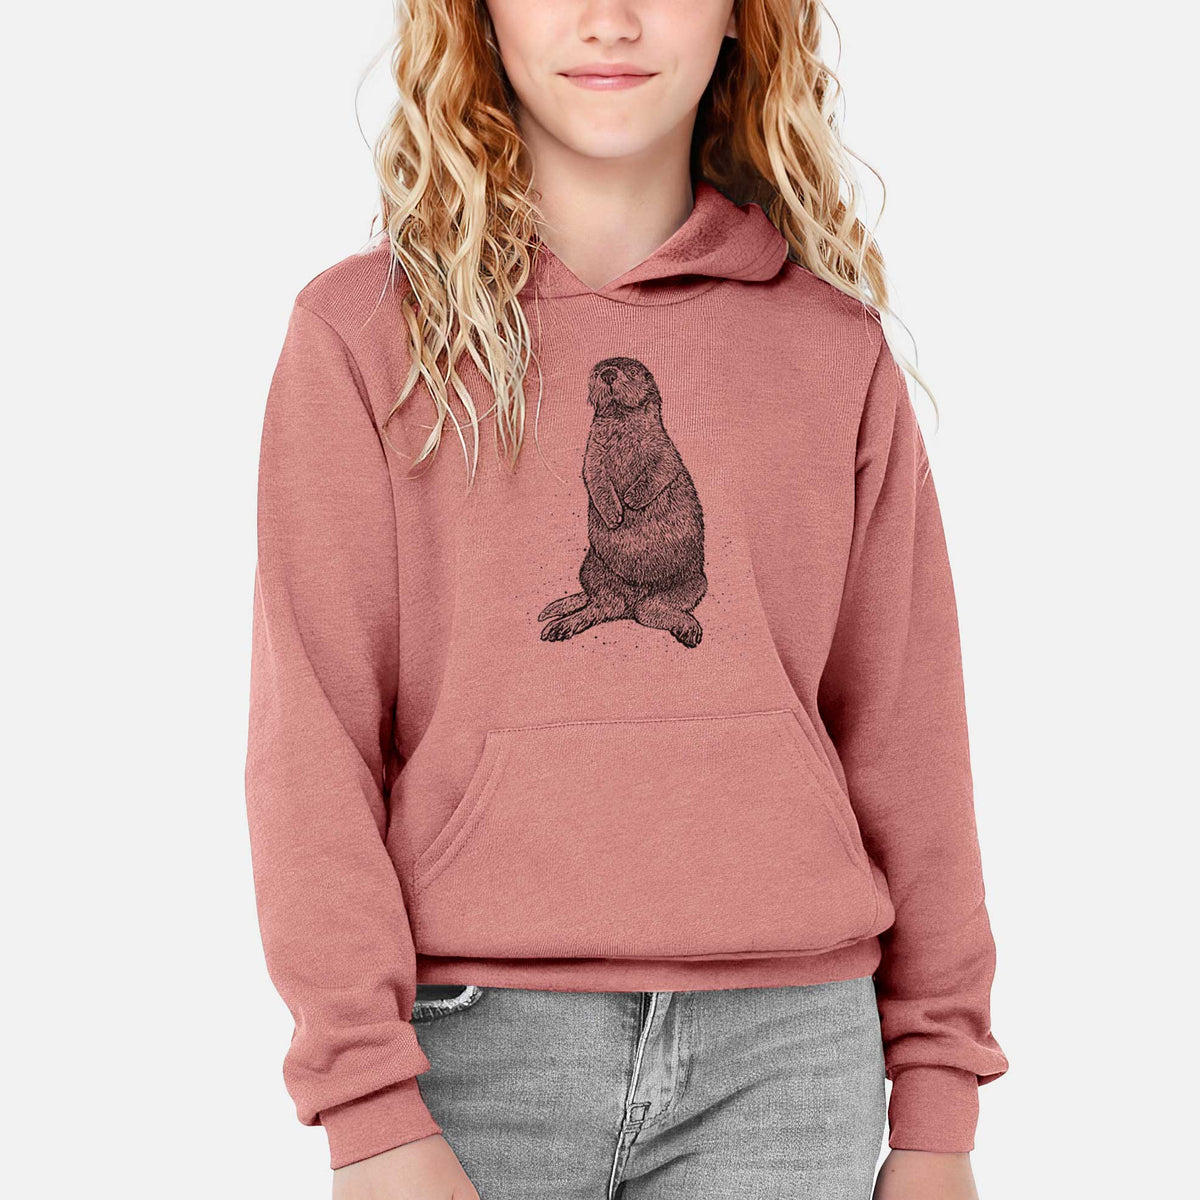 Enhydra lutris - California Sea Otter - Youth Hoodie Sweatshirt